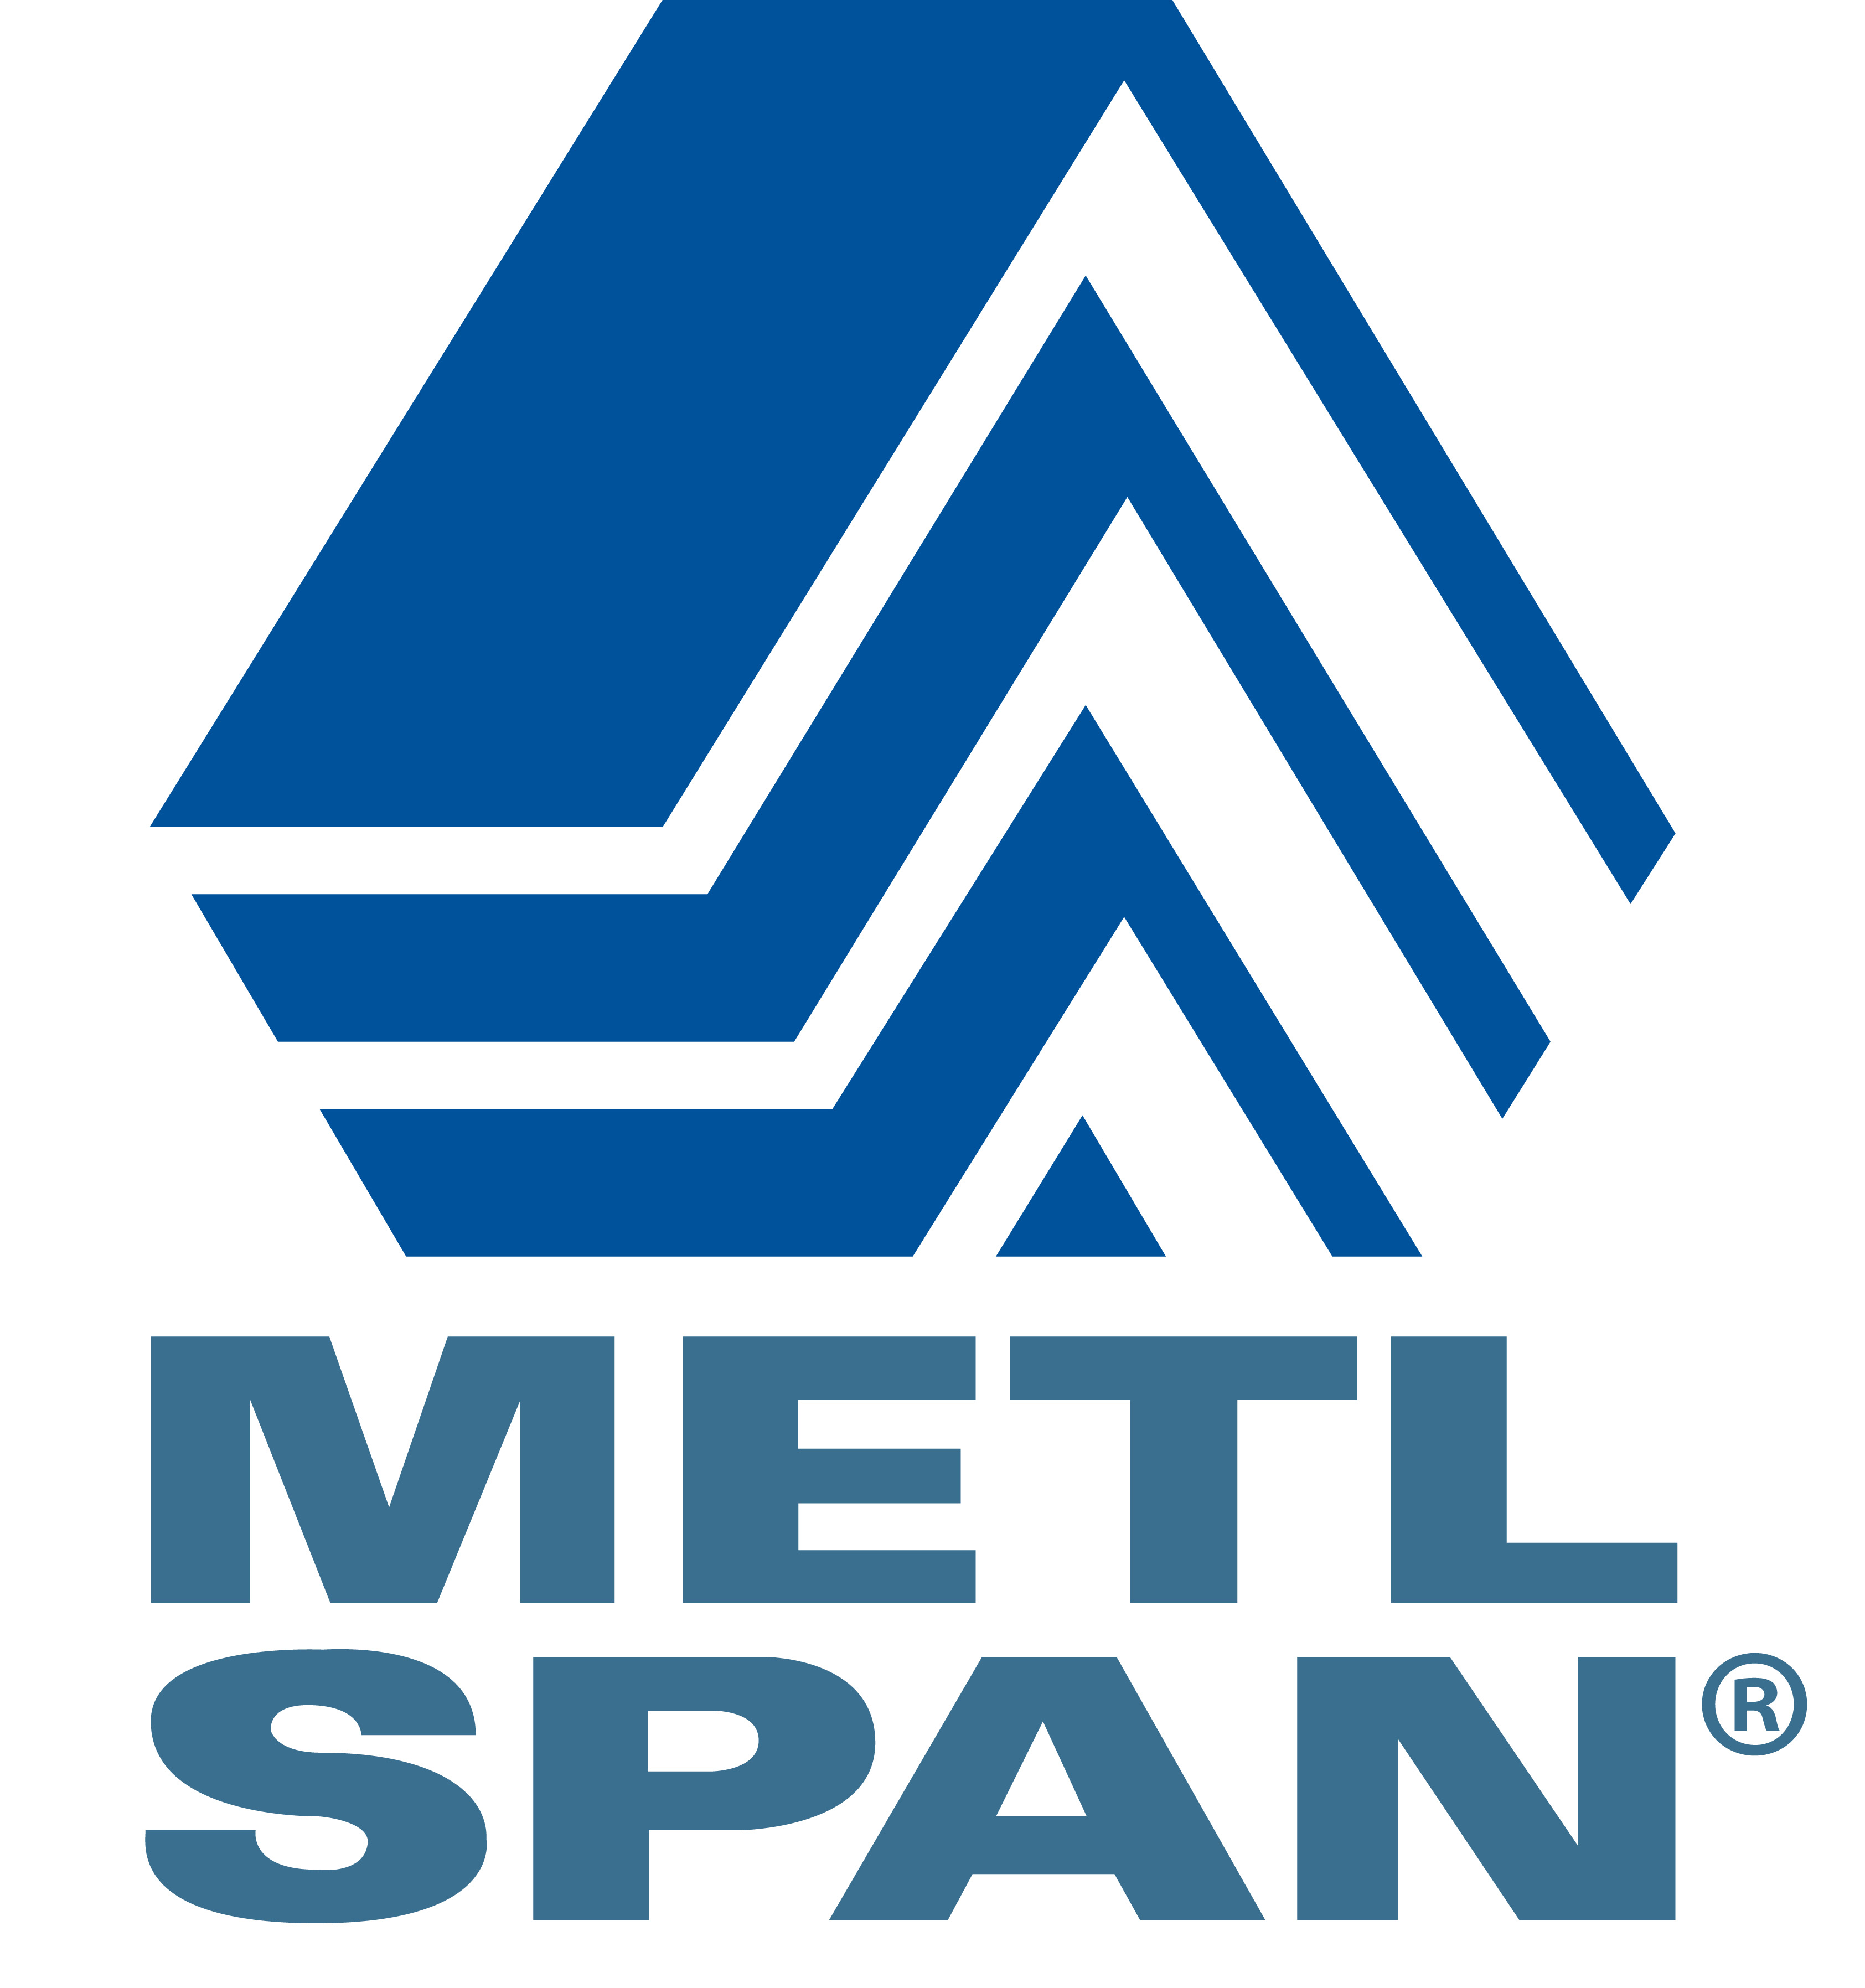 Span logo. RSPAN логотип. By span логотип. Metl maxsulotlari logo PNG.